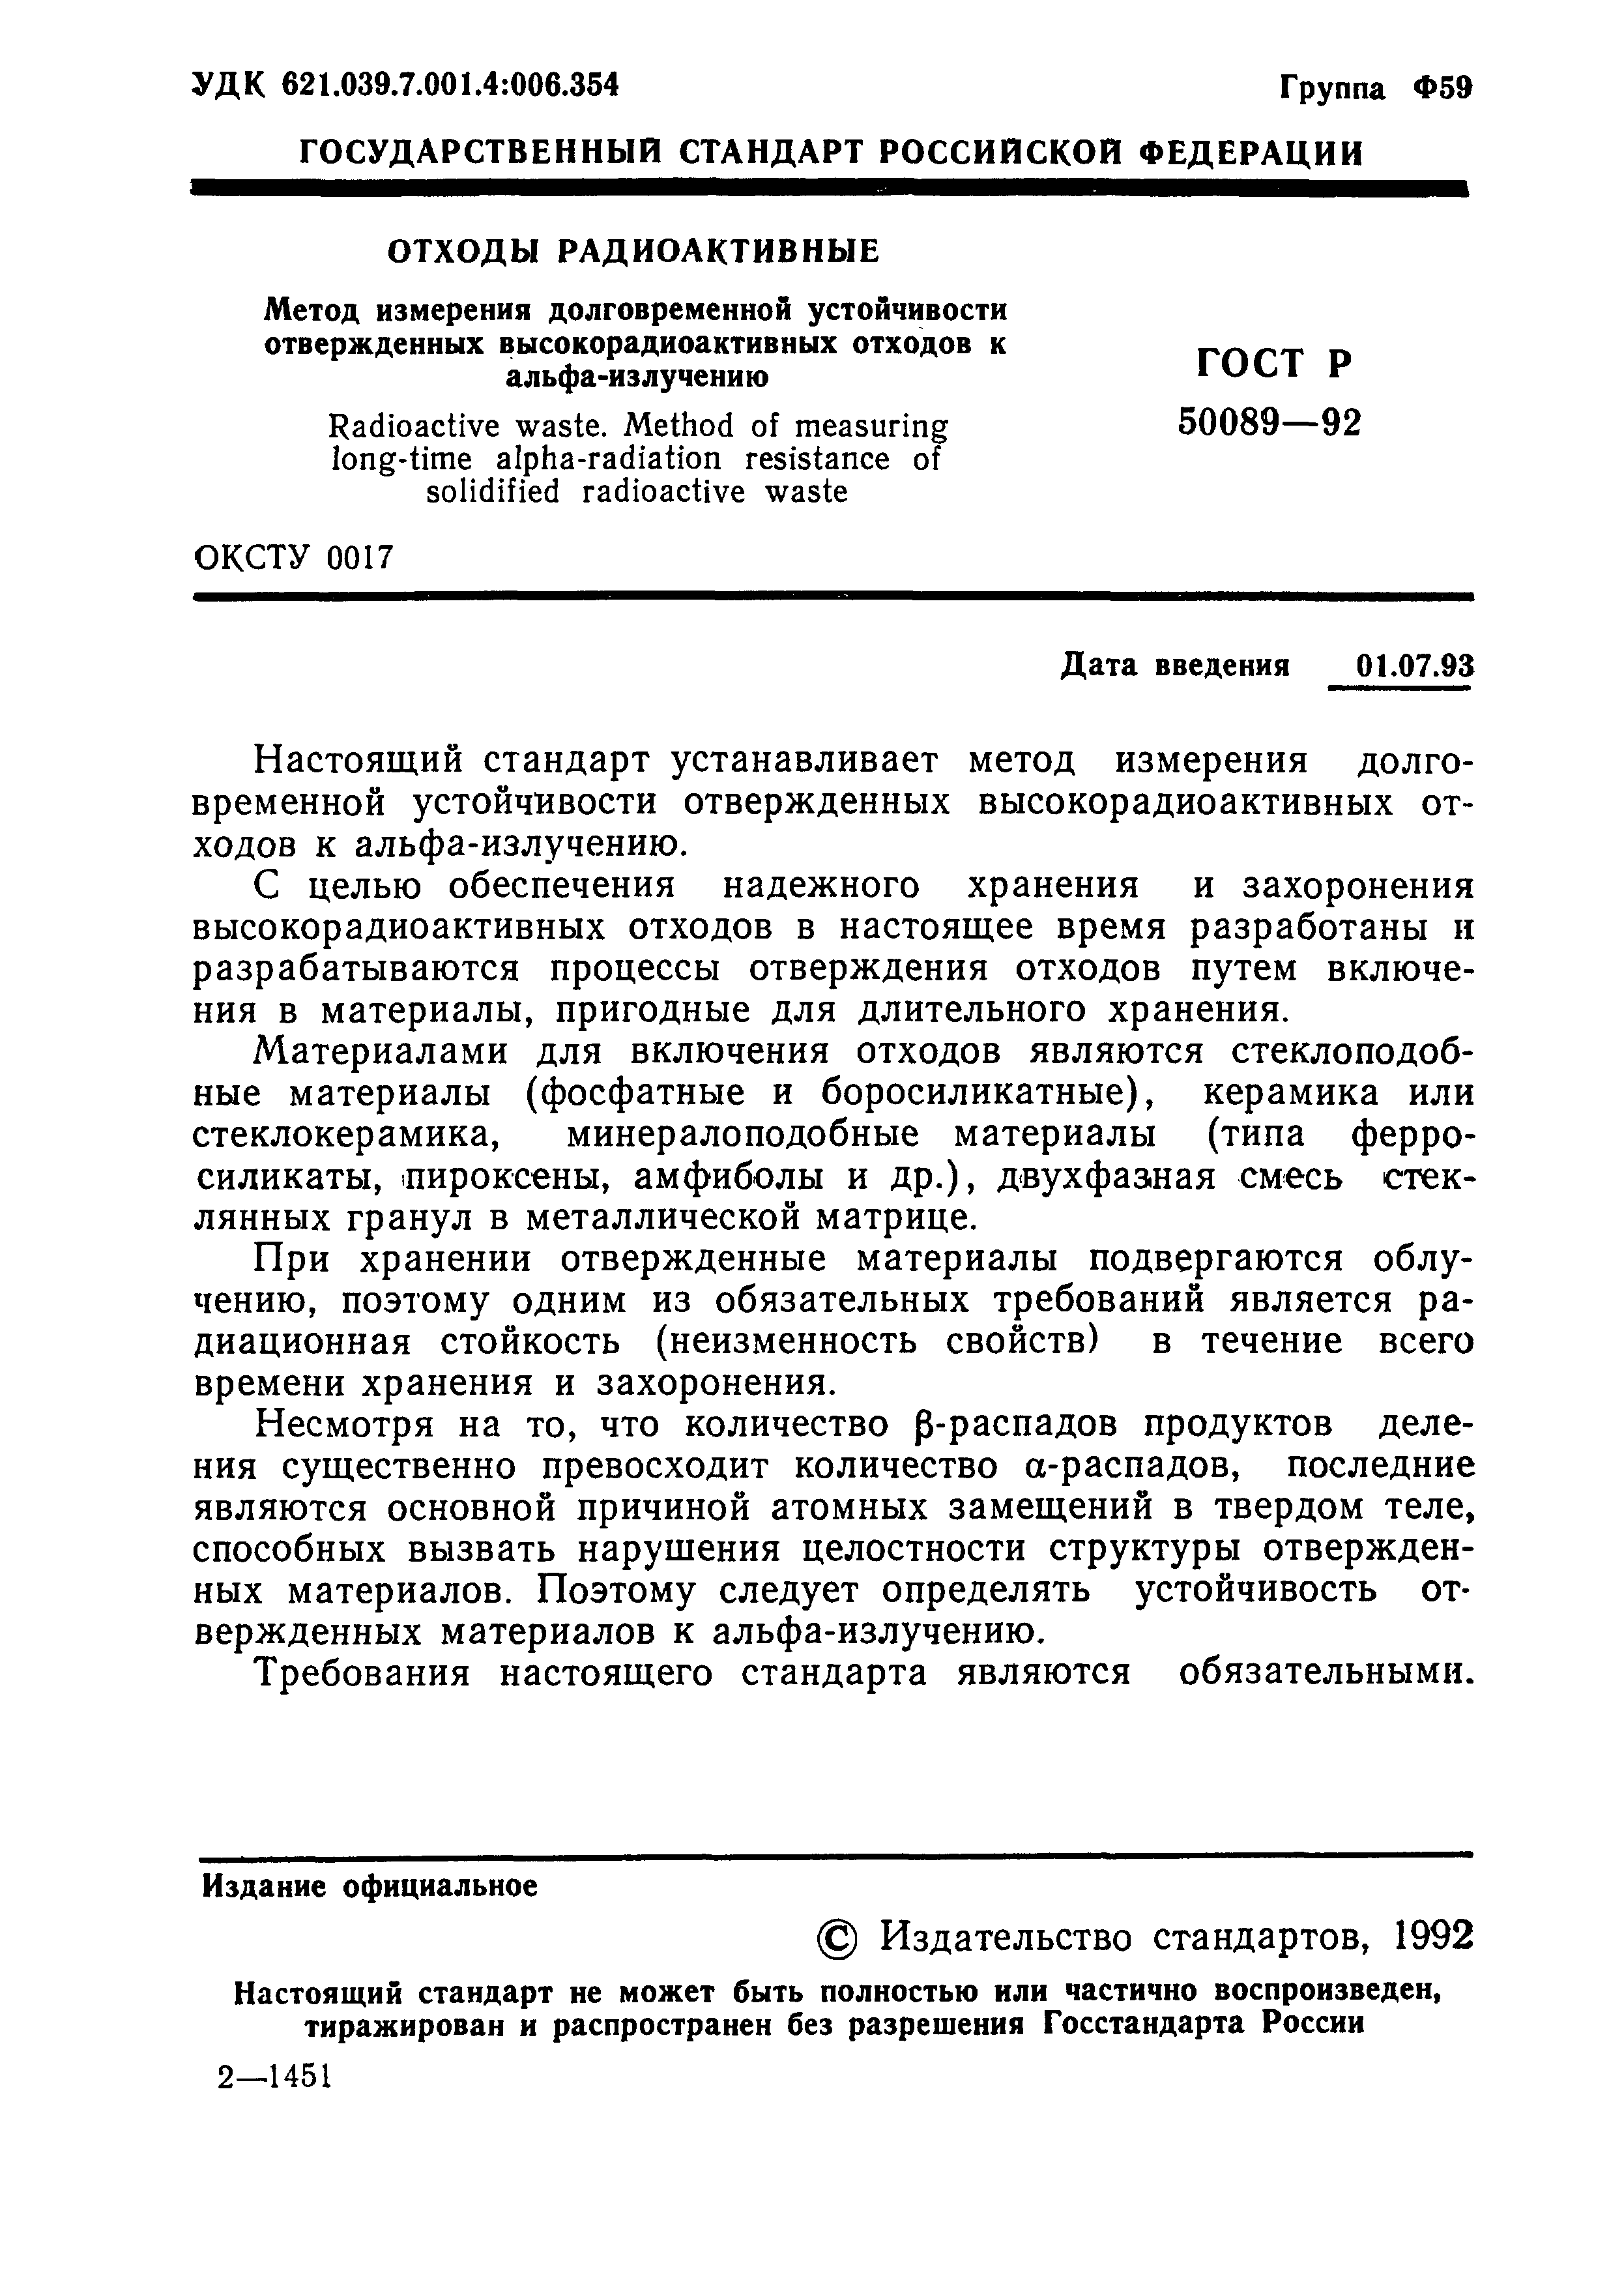 ГОСТ Р 50089-92